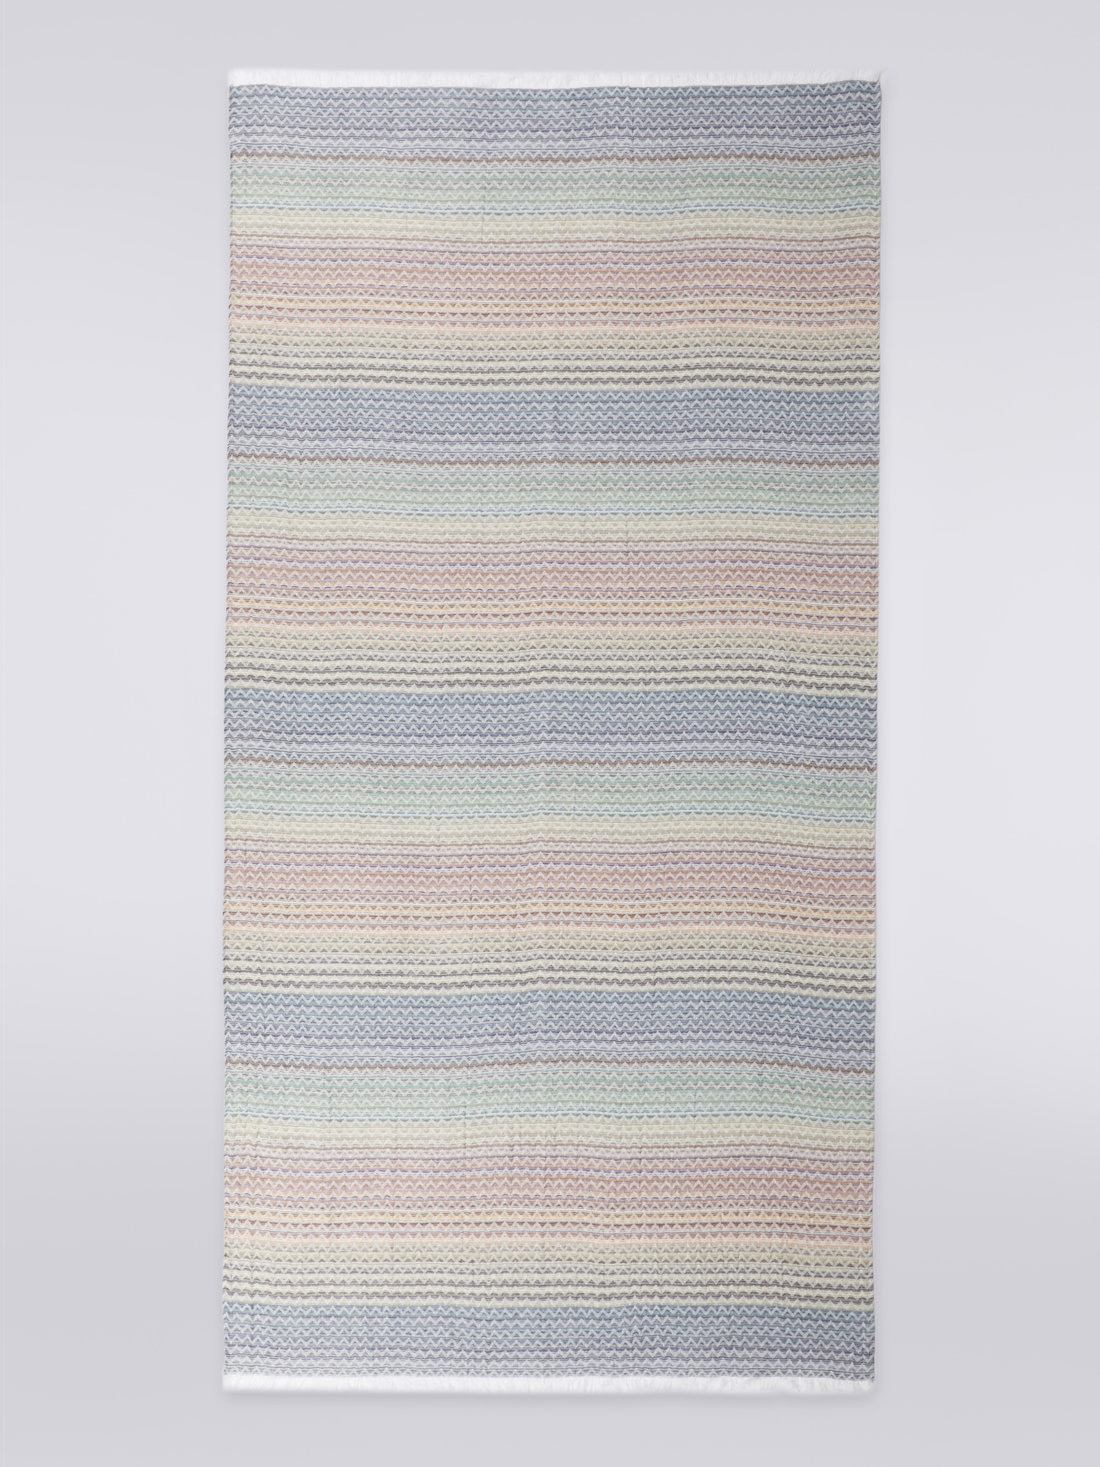 Simone plaid blanket 100x190 cm, Multicoloured  - 8051275111917 - 1